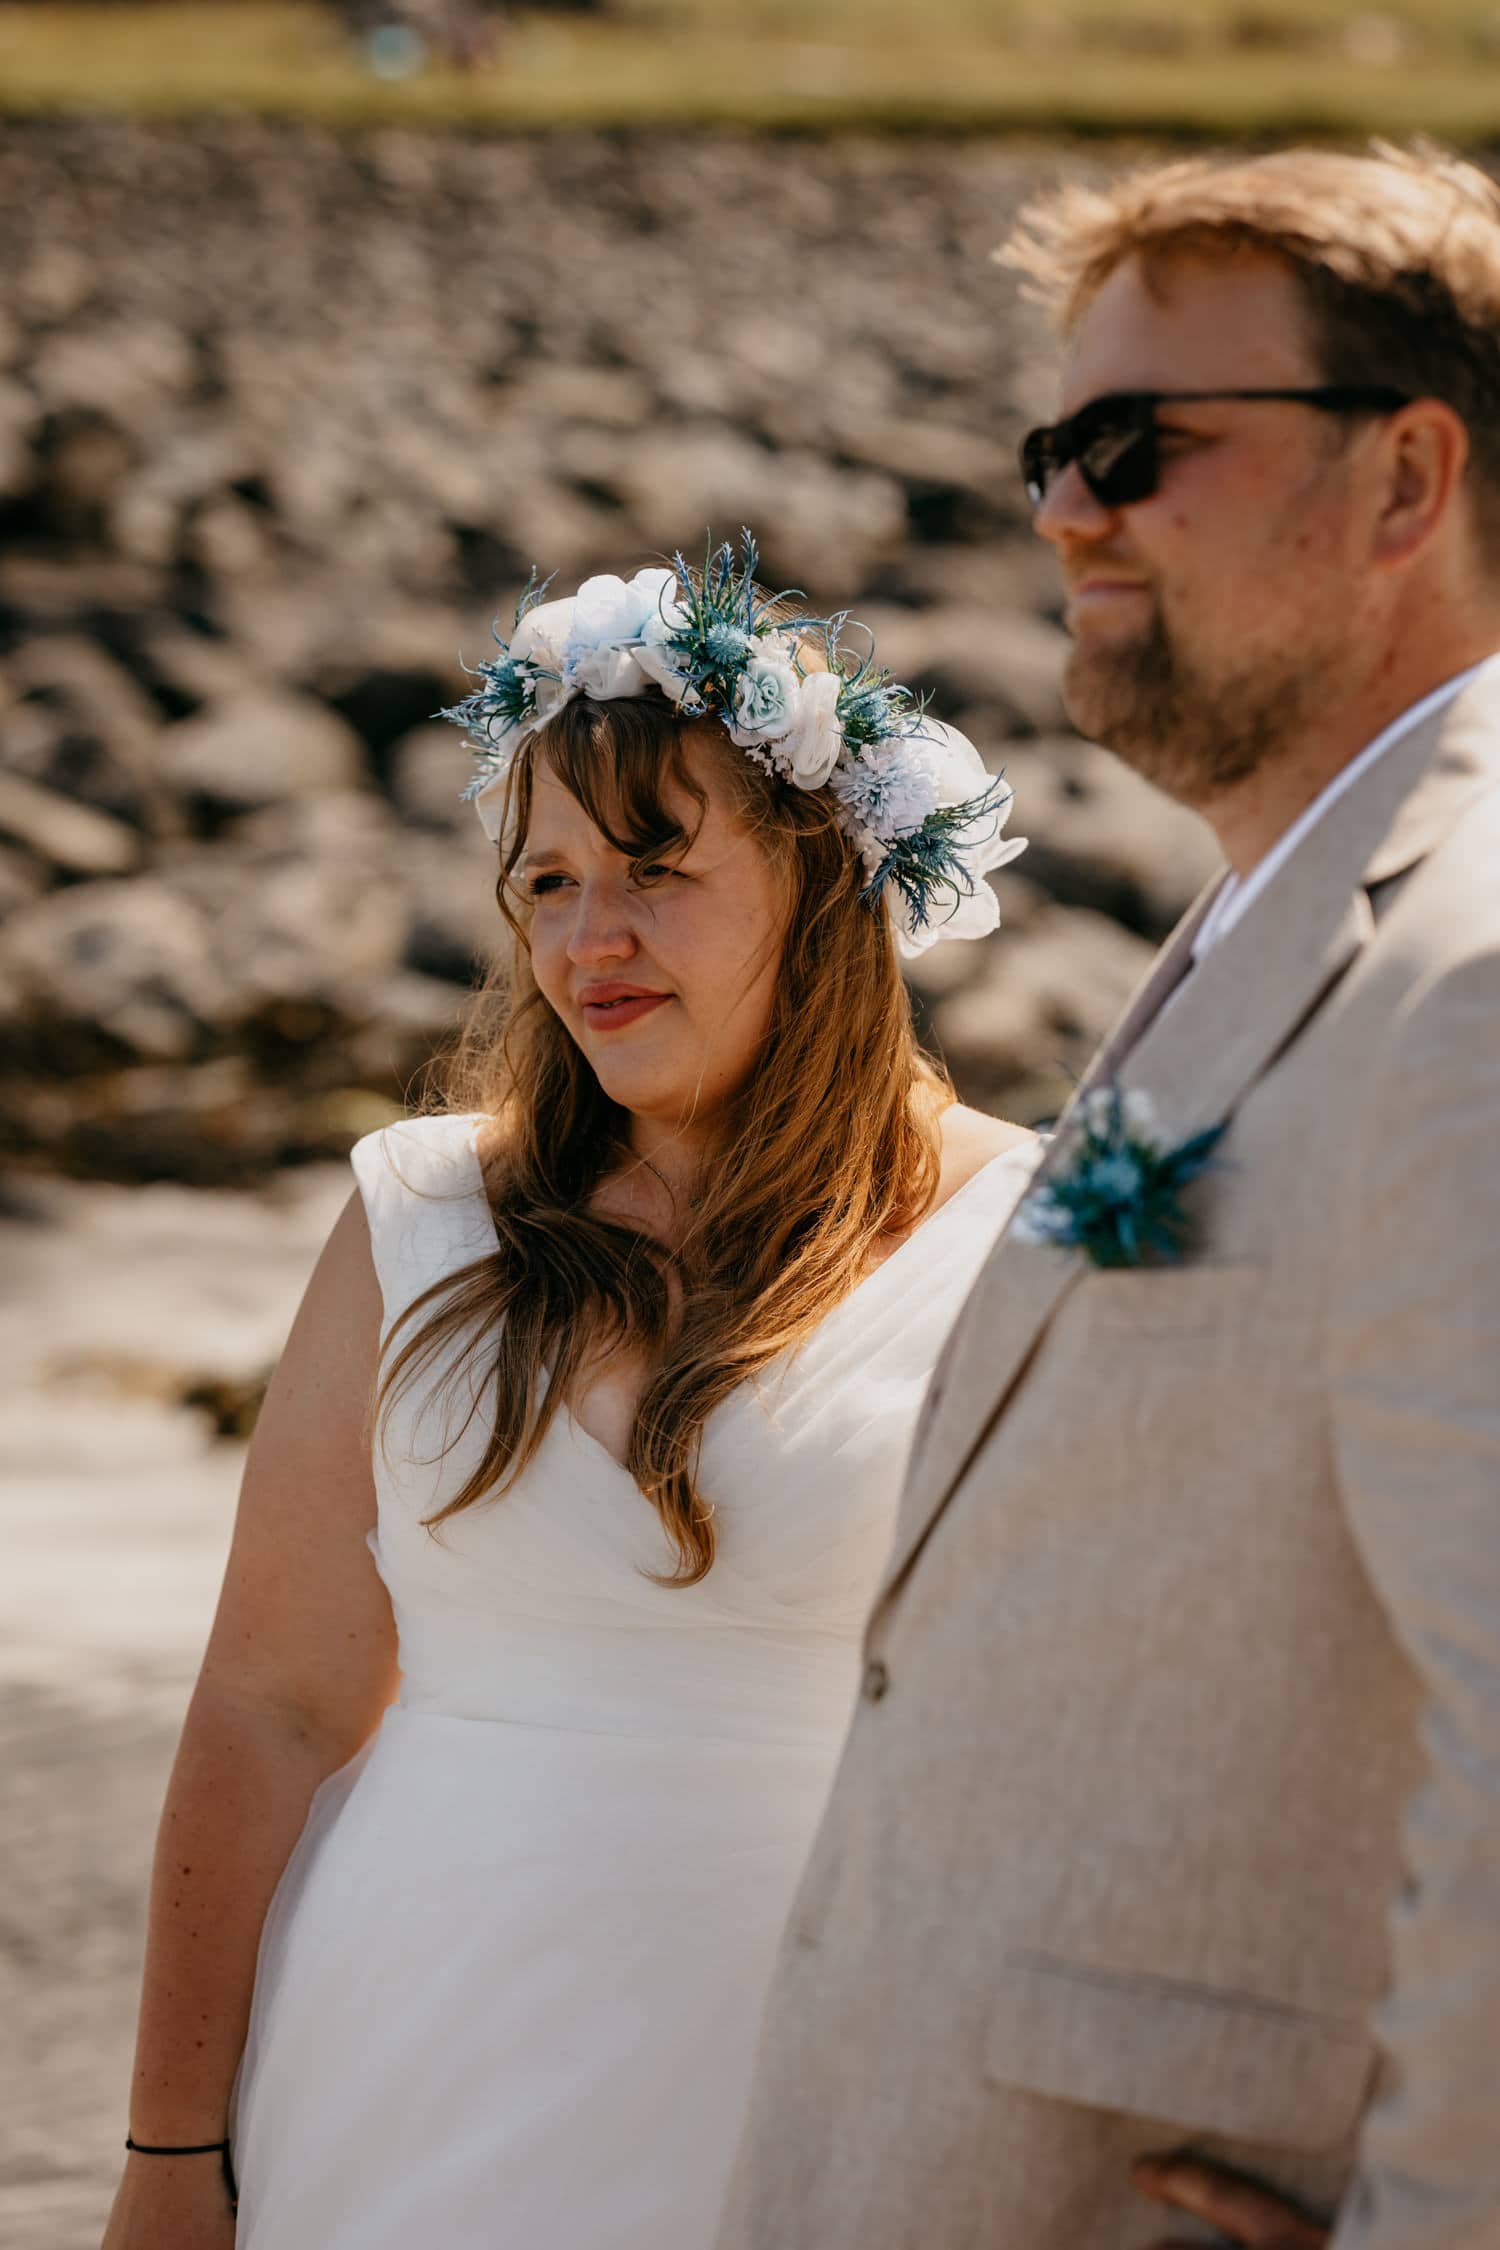 wedding ceremony at Talisker beach, isle of skye